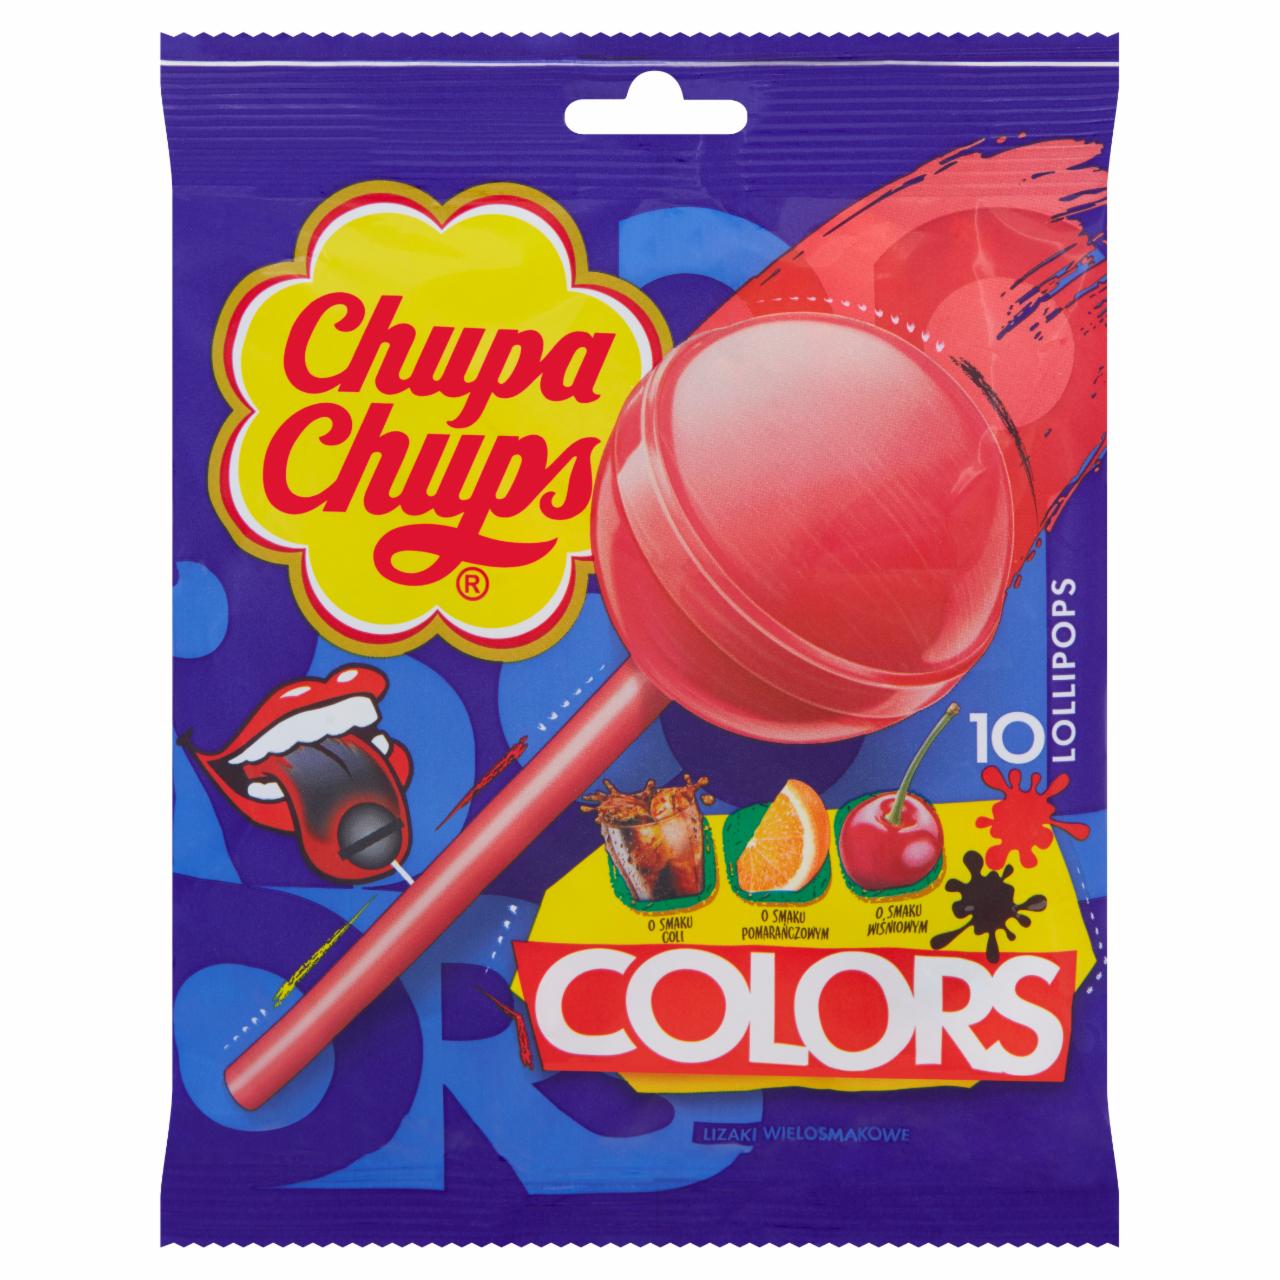 Zdjęcia - Chupa Chups Colors Lizaki wielosmakowe 120 g (10 sztuk)